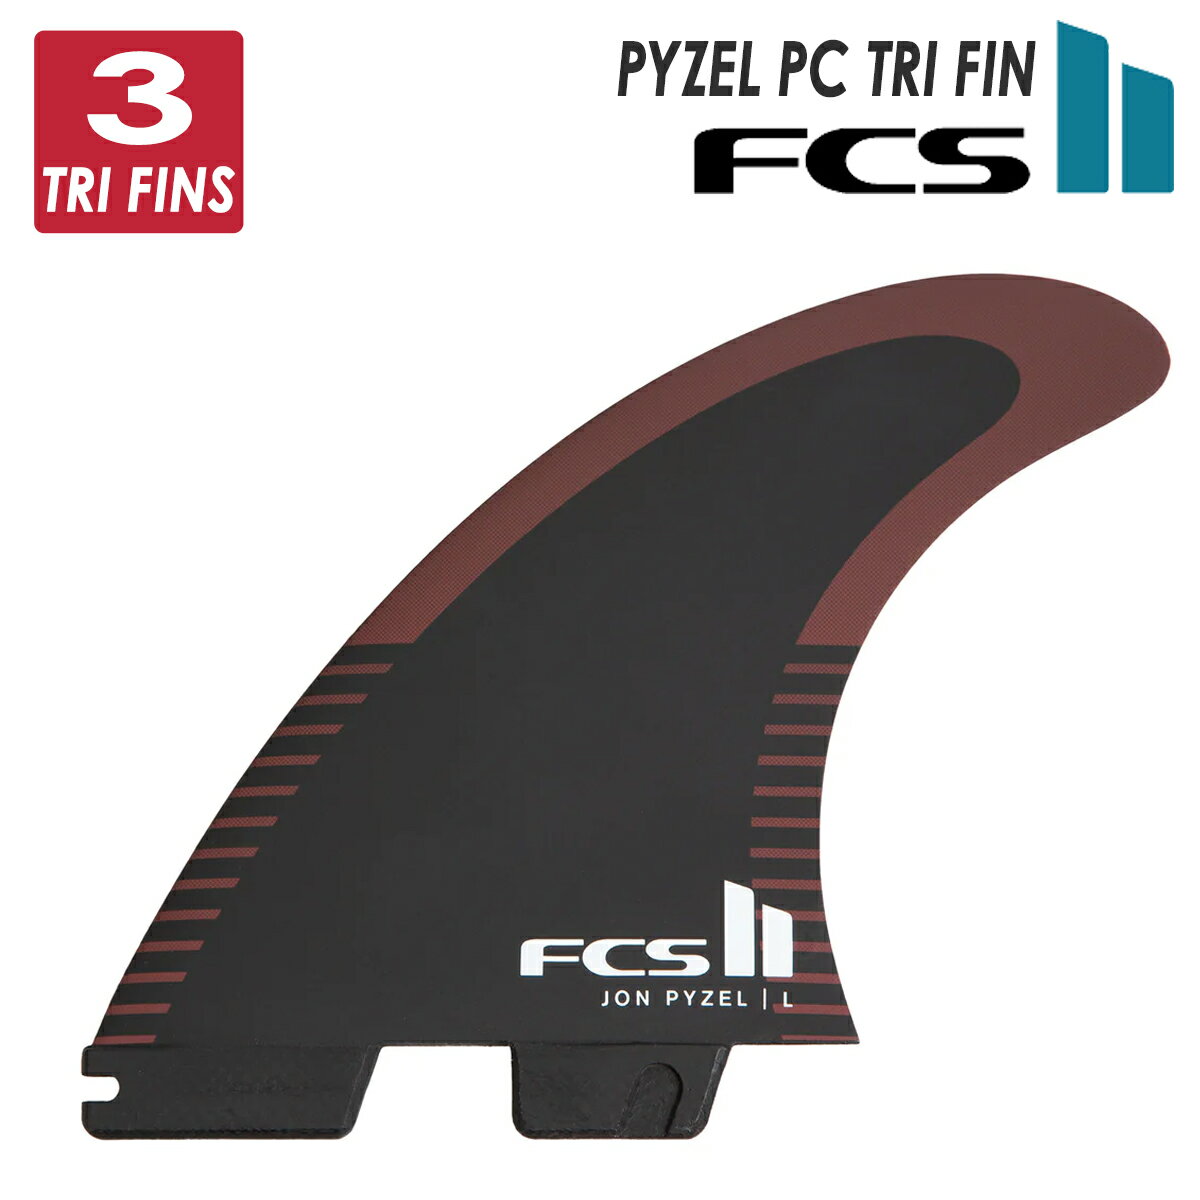 24 FCS2 フィン JP PYZEL PC TRI FIN SET ジョン・パイゼル トライフィン スラスター パフォーマンスコア 3フィン 3本セット FCSII 日本正規品